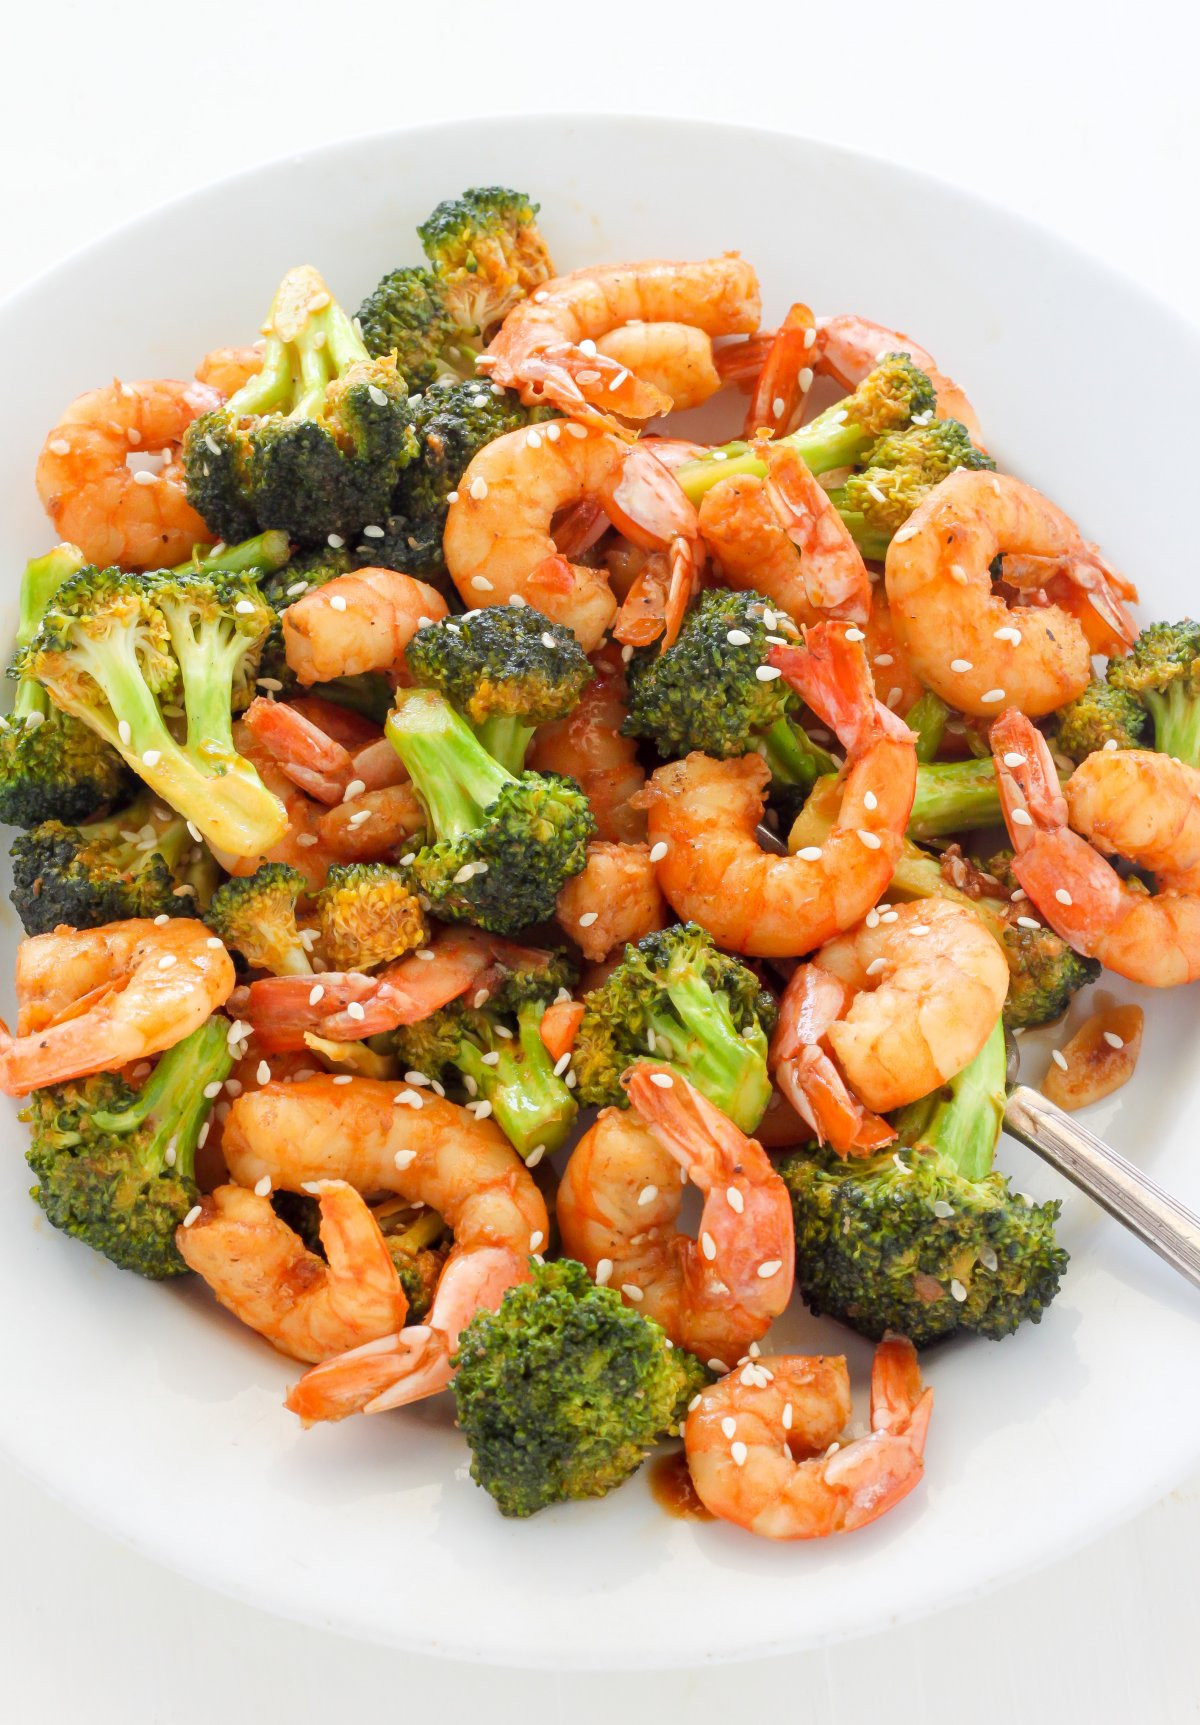 Shrimp And Broccoli Recipes
 20 Minute Skinny Sriracha Shrimp and Broccoli Baker by